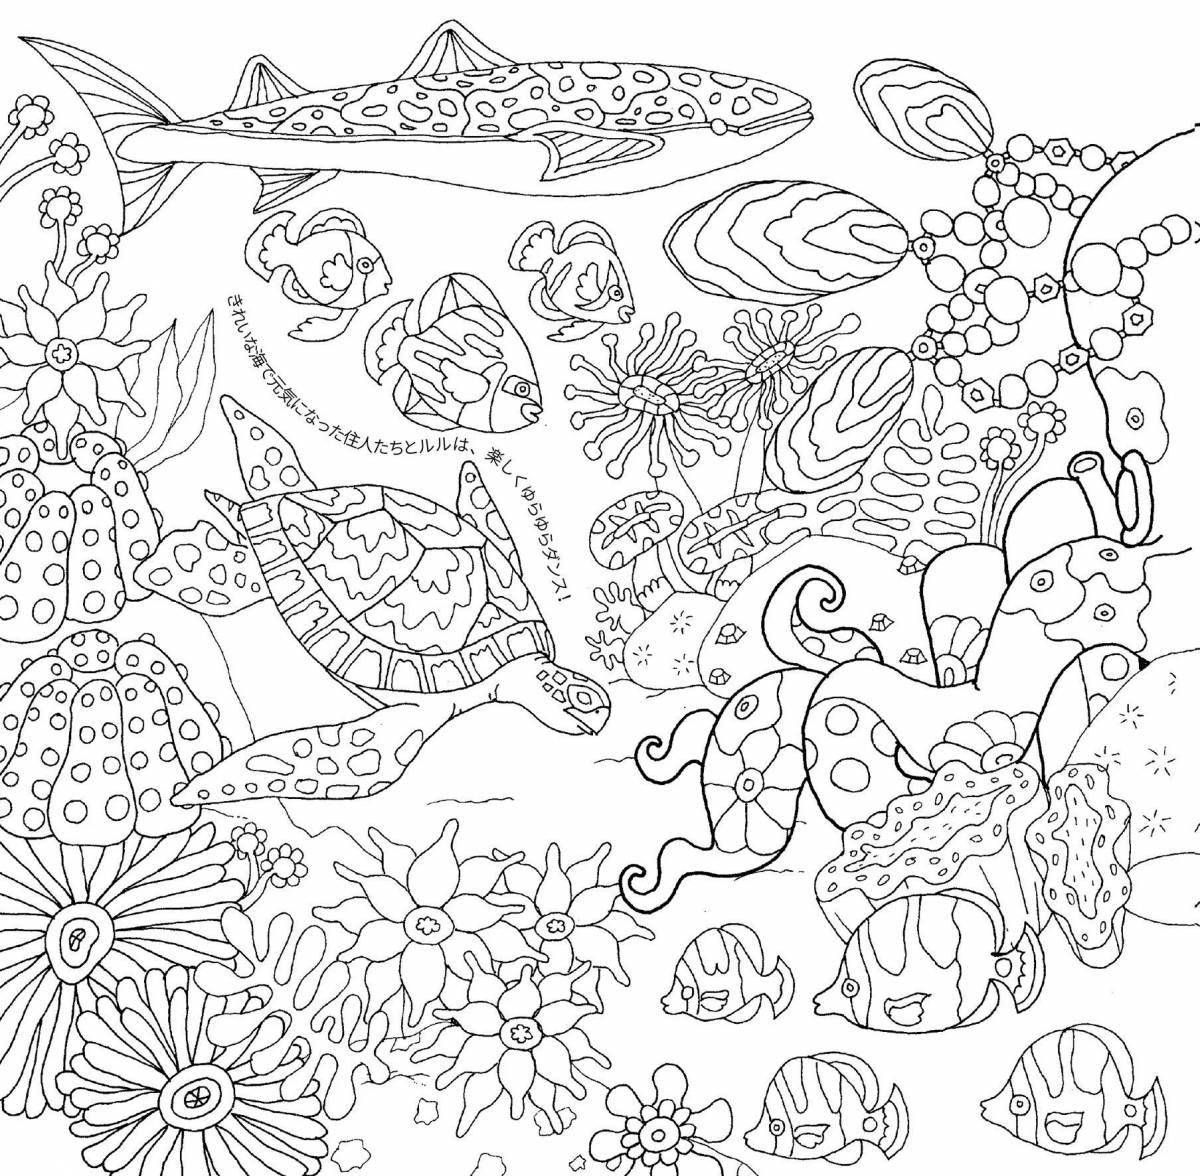 Joyful anti-stress marine life coloring book